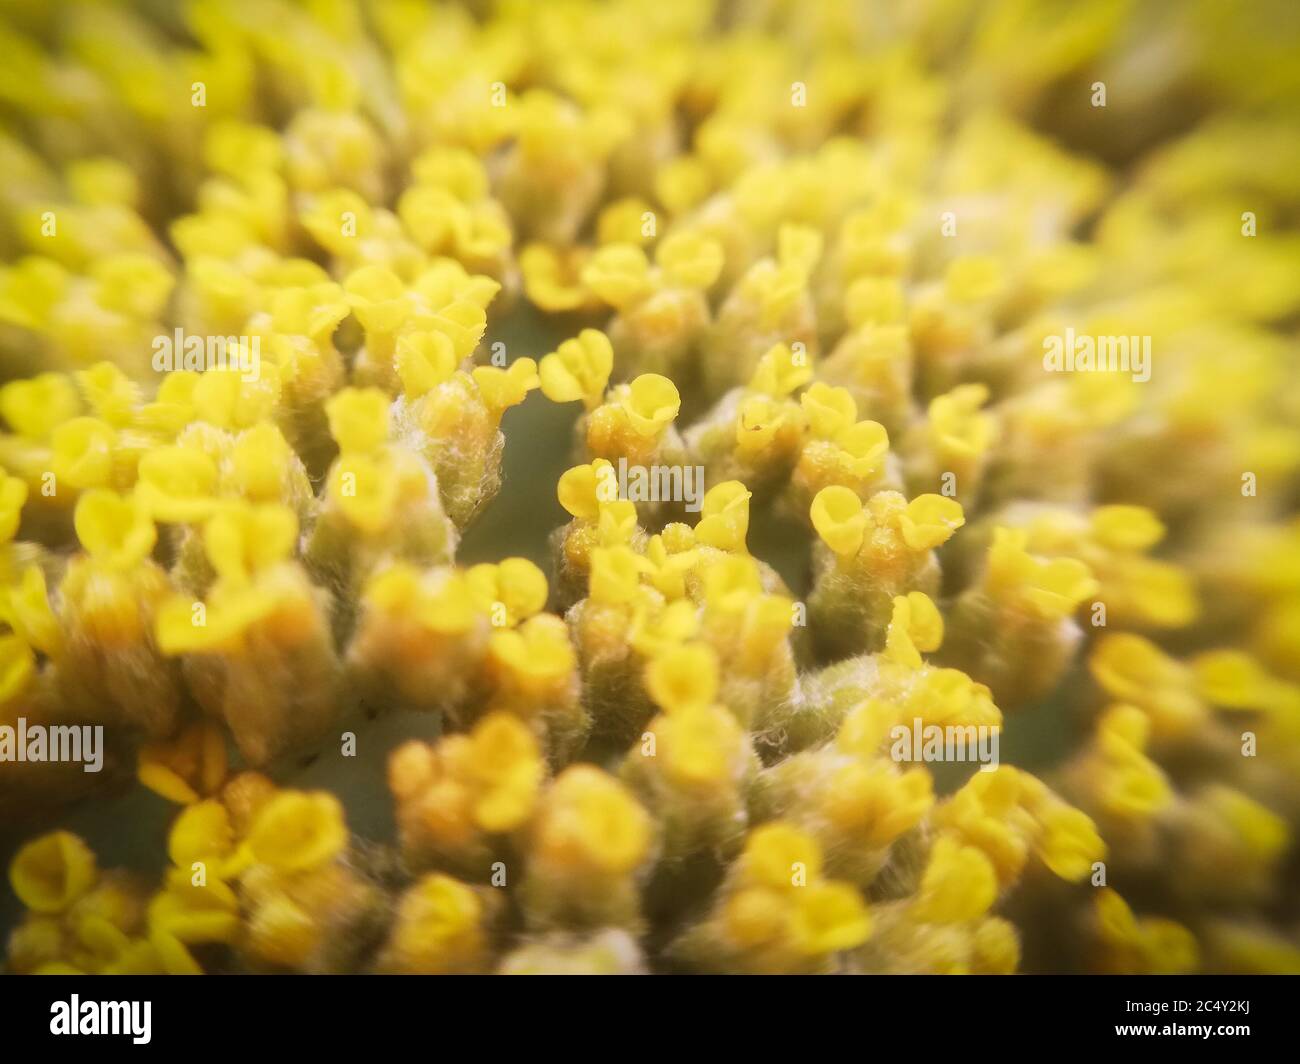 Achillea clypeolata “Schwellenburg”. lot of little yellow flowers in close-up. Macro photography Stock Photo